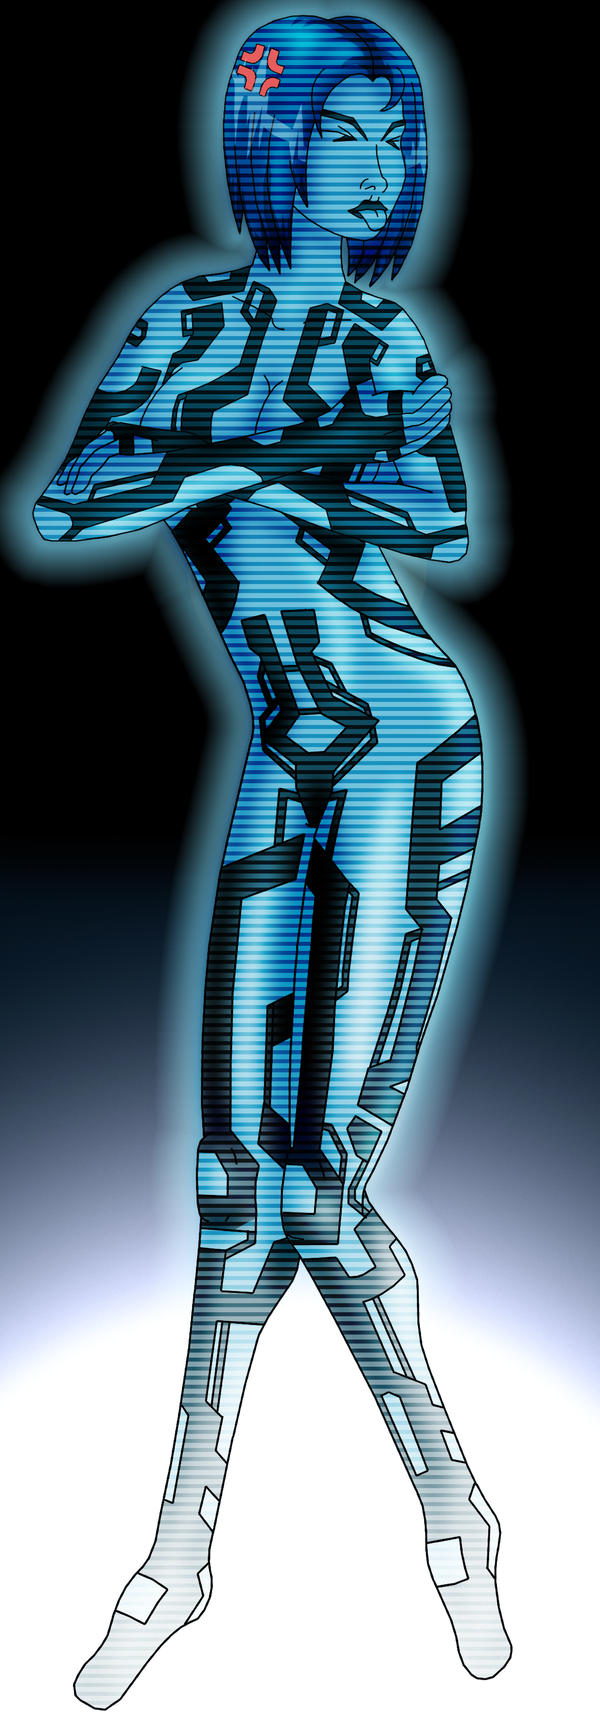 Halo - Cortana by Diamond4444 on DeviantArt